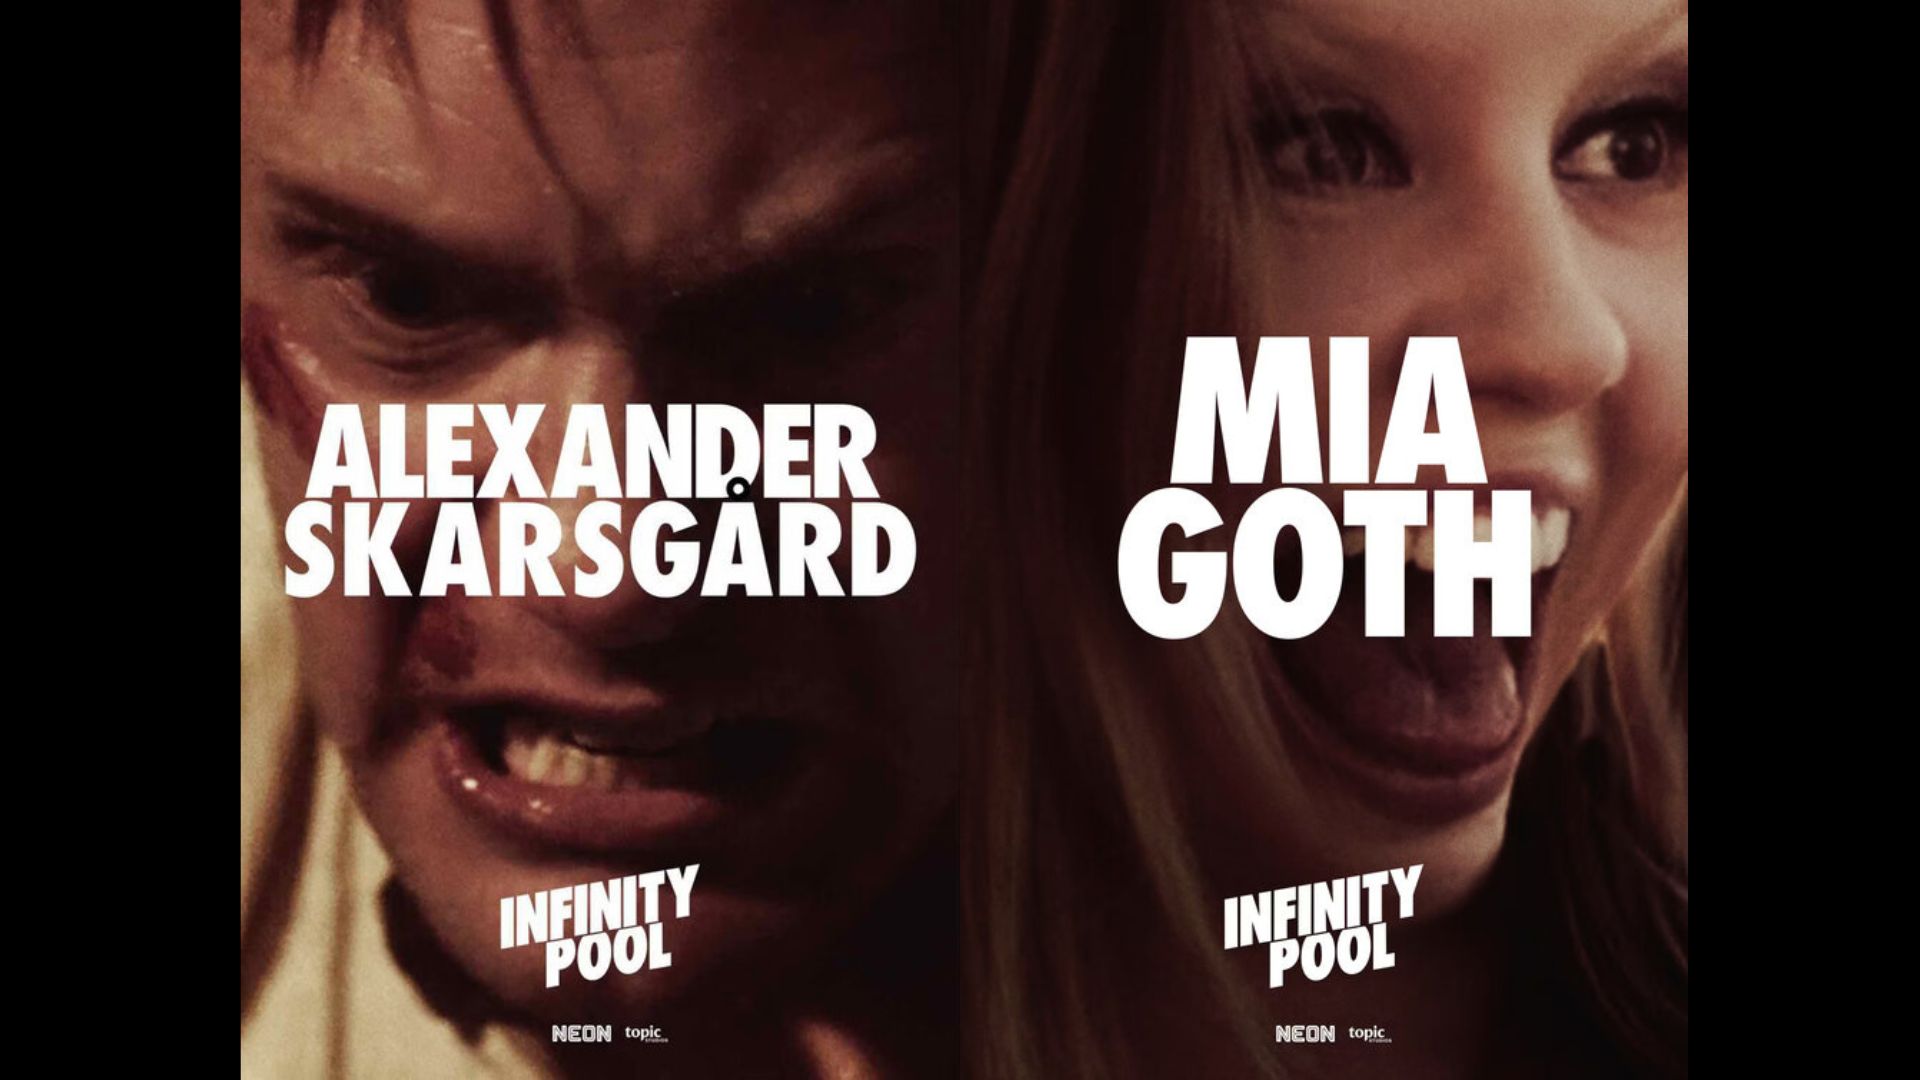 infinity pool posters alexander skarsgard mia goth